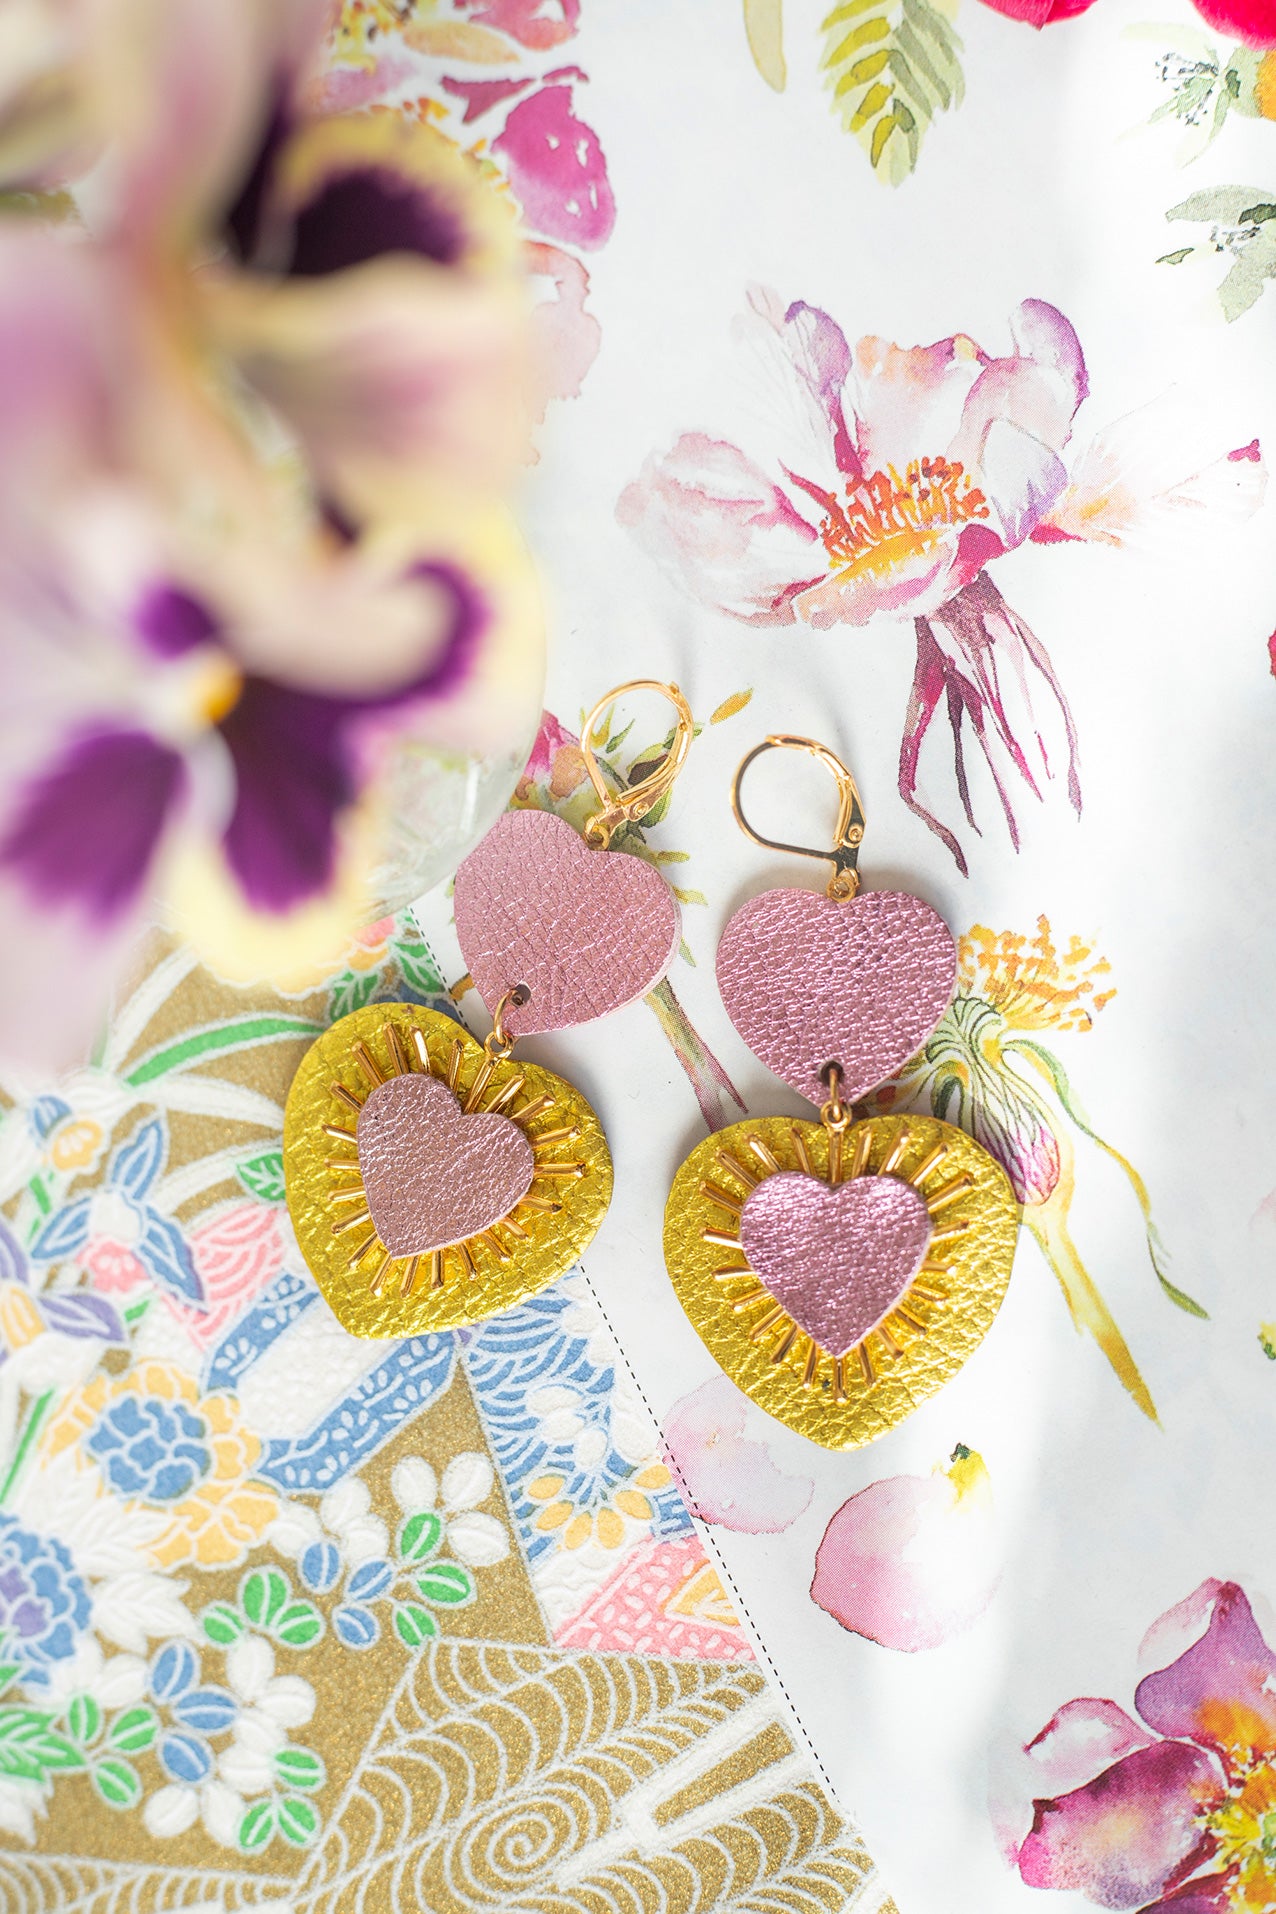 Pink and metallic yellow Ex-Voto Heart earrings